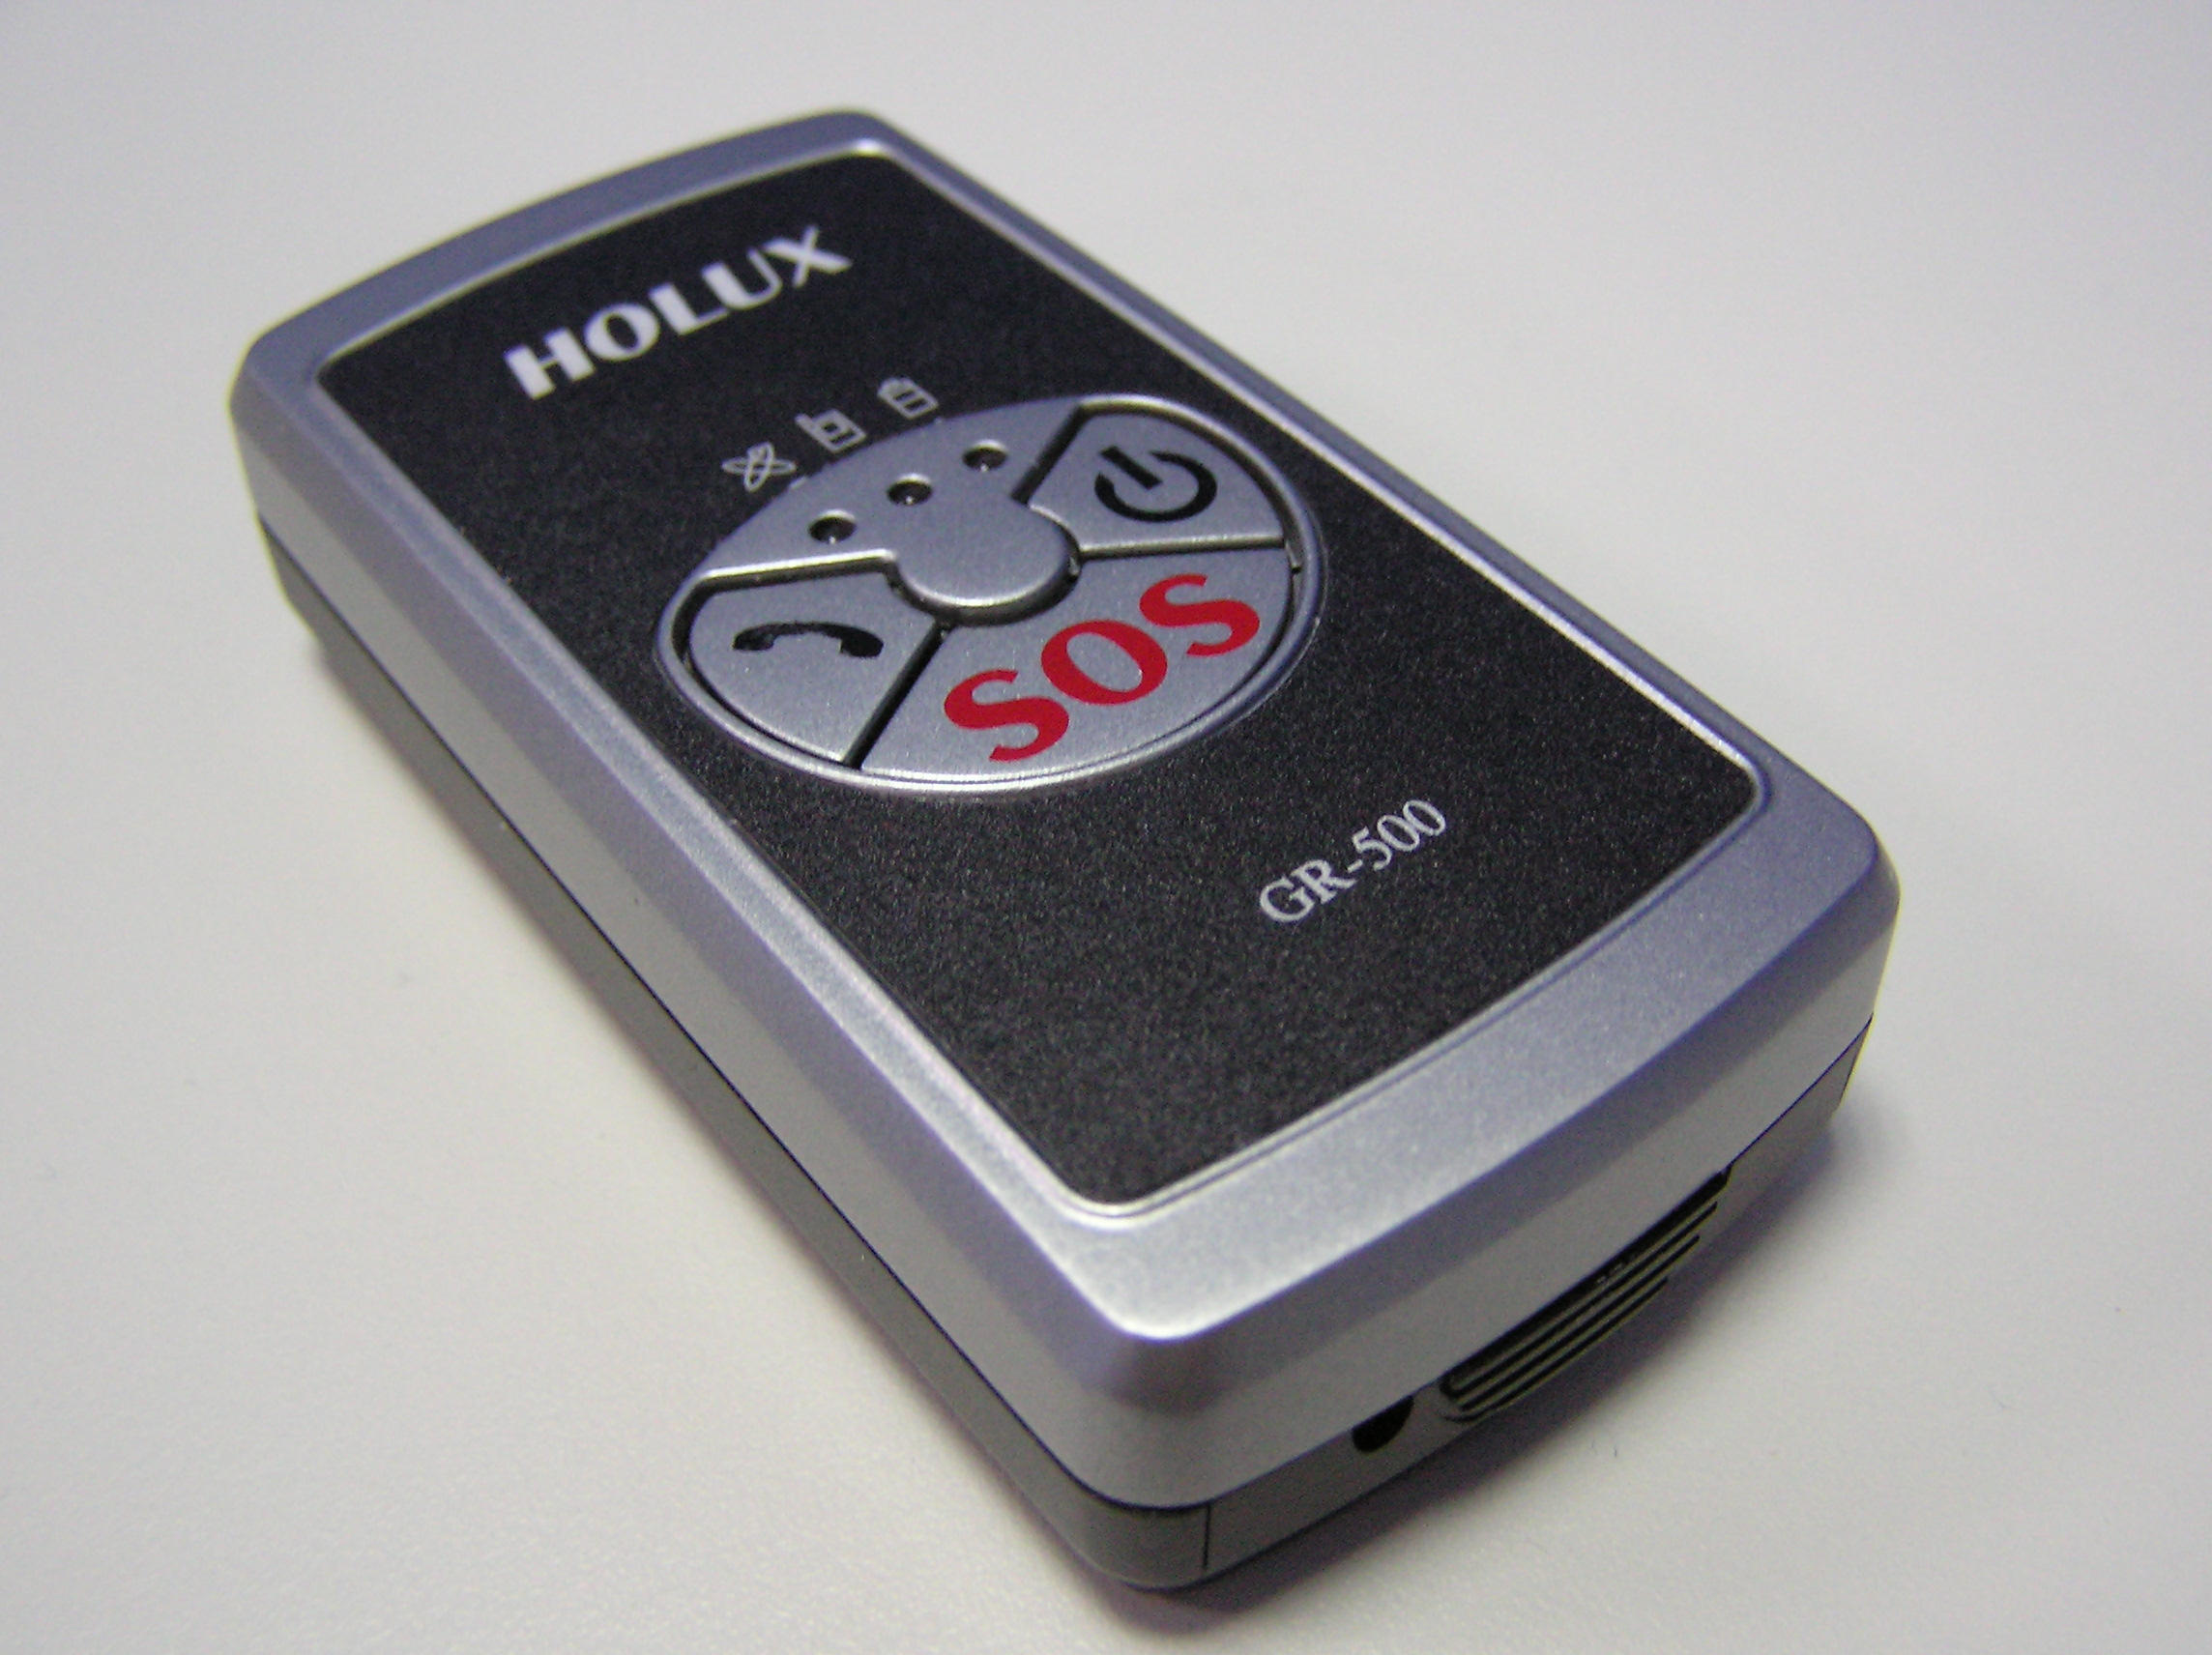 GR-500 Handheld GPS Tracker